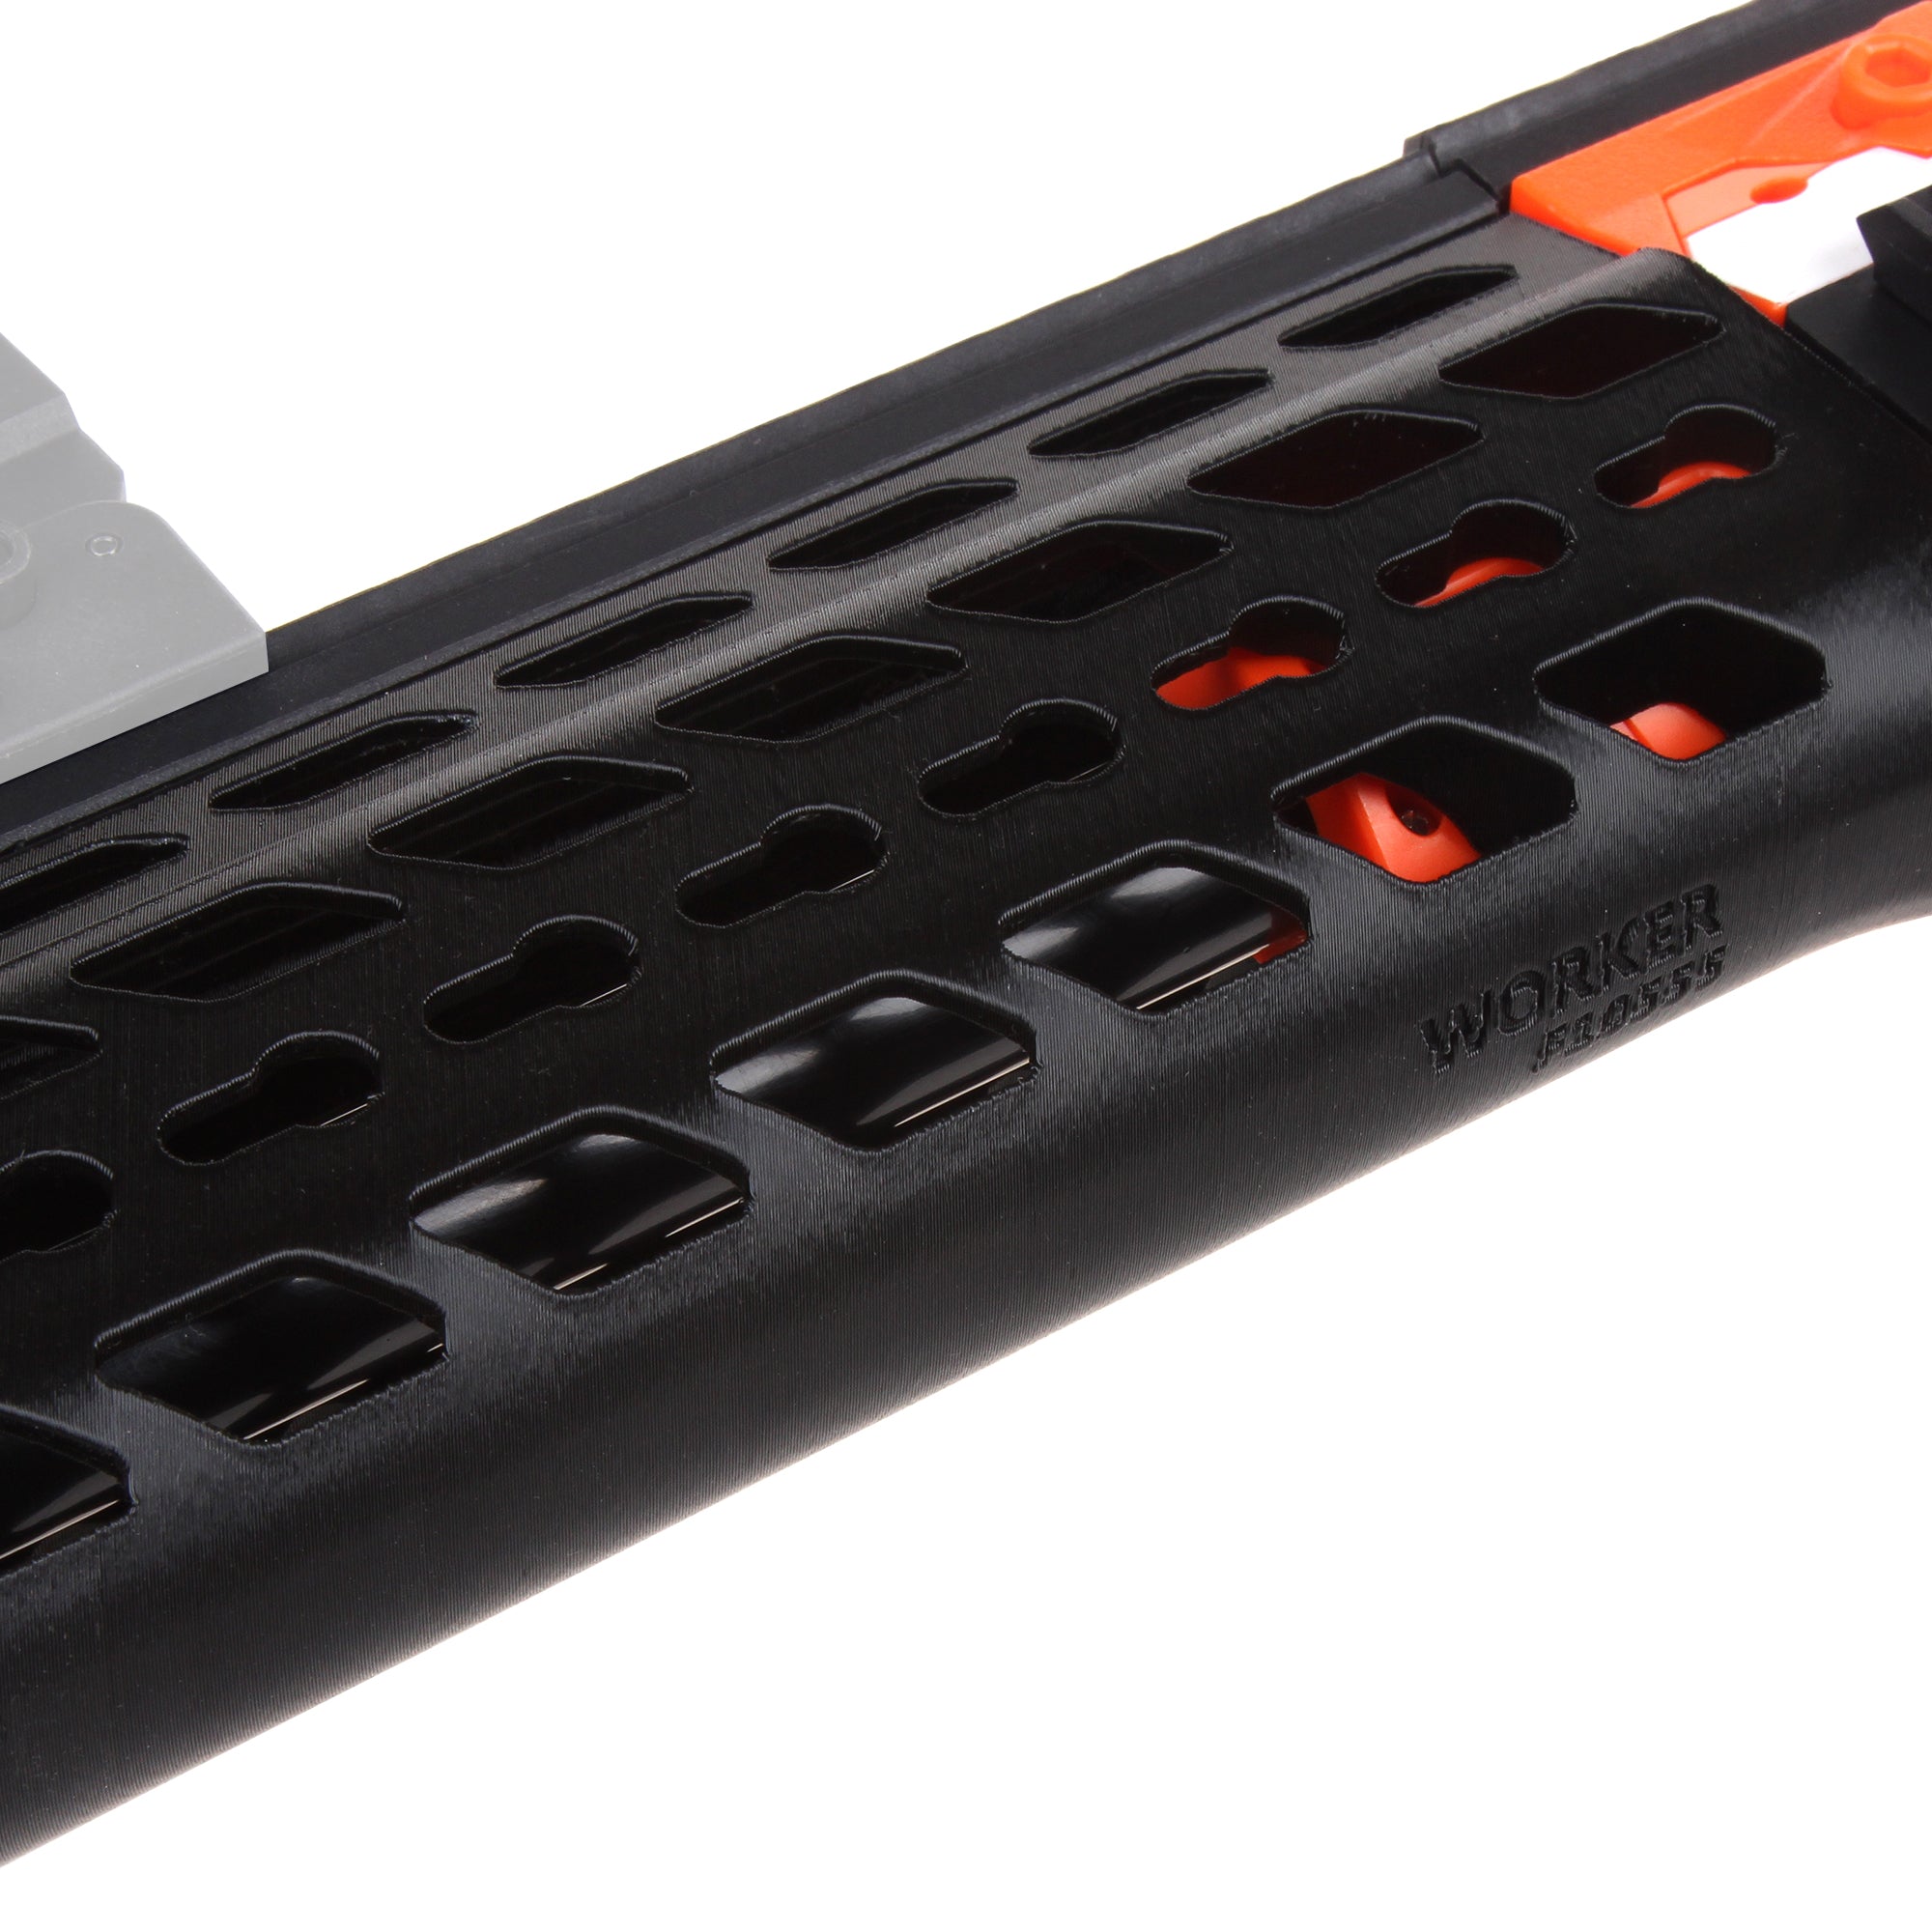 Worker Mod DIY Imitation AK ALFA Kits (AK Stock) Combo11 Items kits for Nerf Stryfe Modify Toy Color Black - BlasterMOD